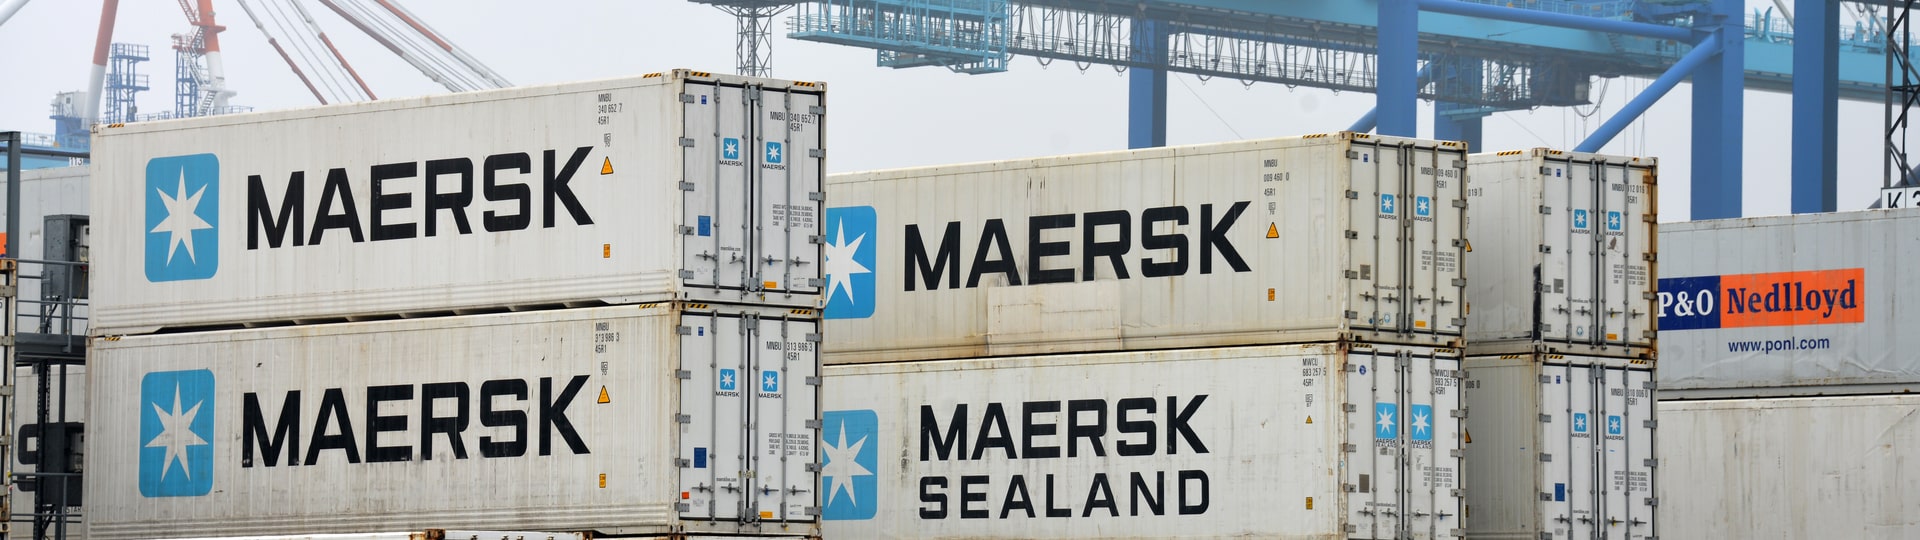 Maersk ztrojnásobil zisk